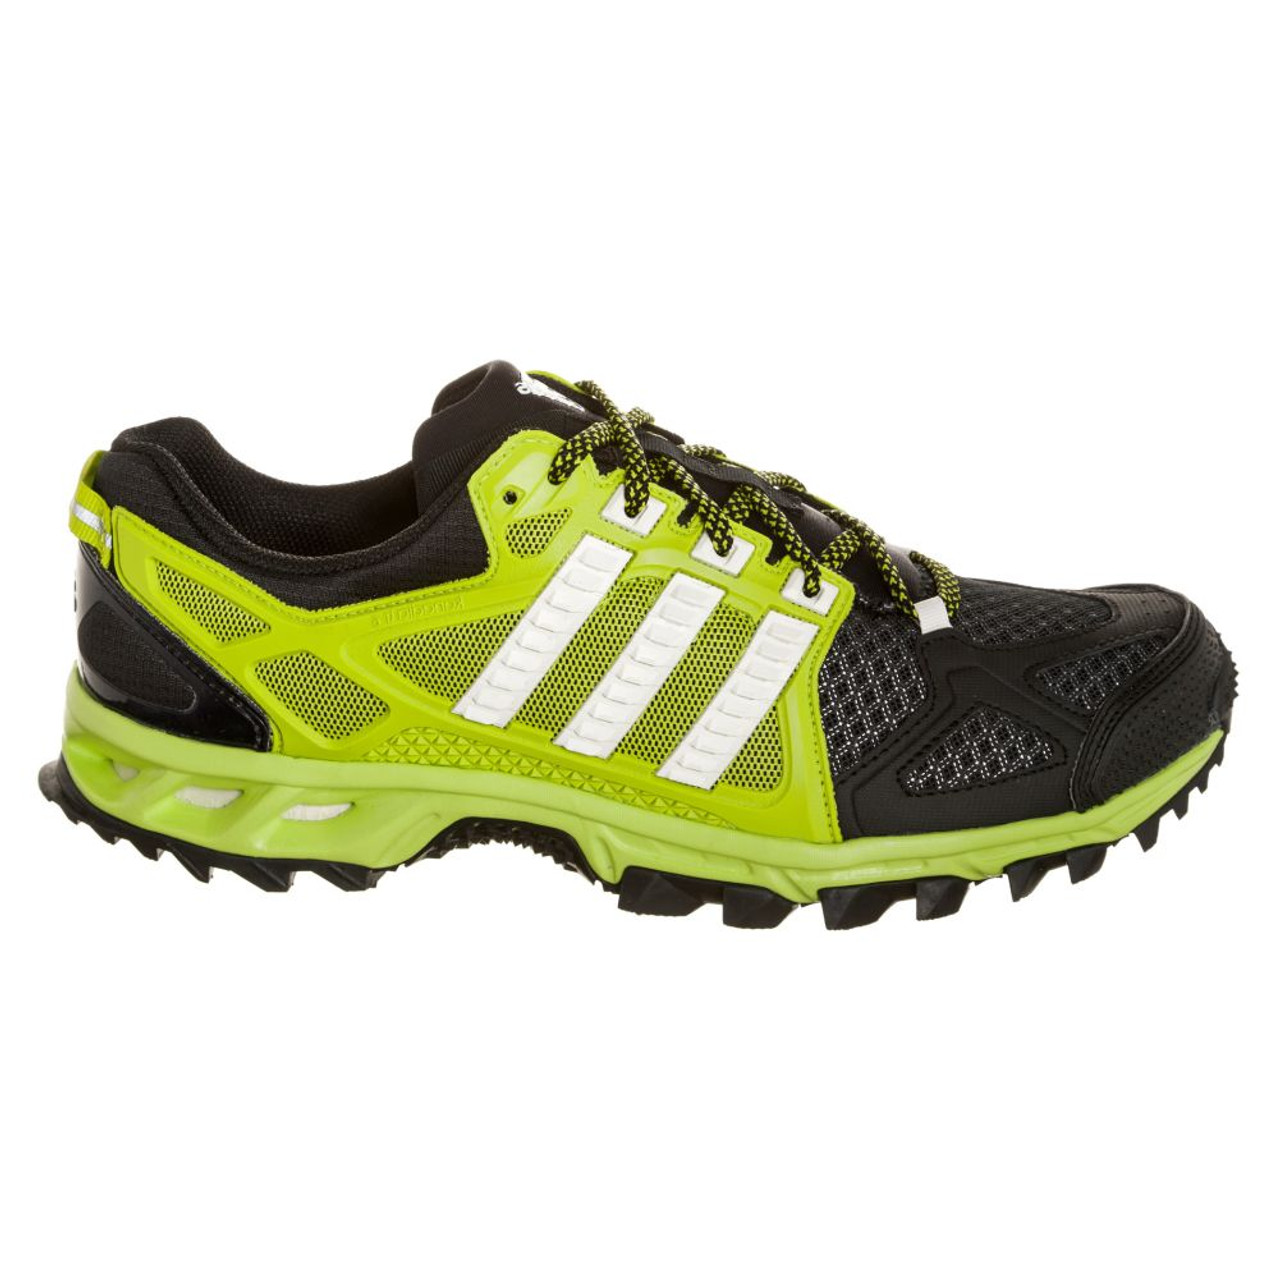 Adidas Men's TR 6 - Solar Slime/Chalk/Black | Discount Men's Athletic Shoes & More - Shoolu.com | Shoolu.com